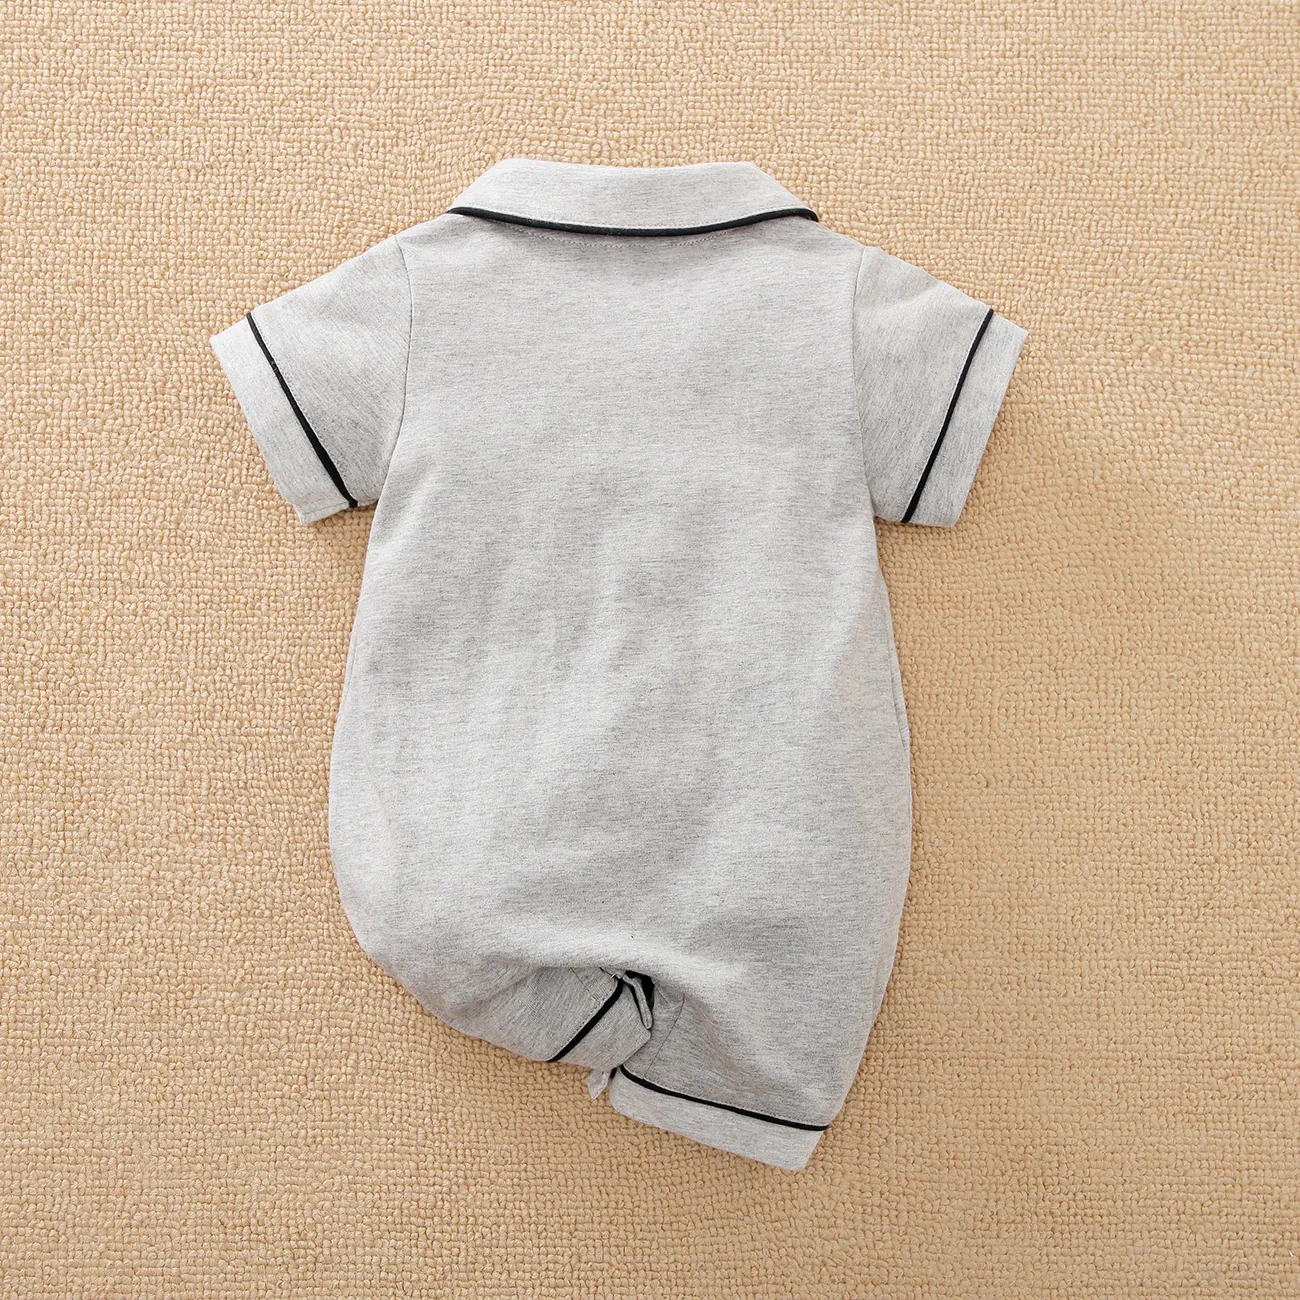 Baby Unisex Revers Lässig Kurzärmelig Baby-Overalls grau big image 1